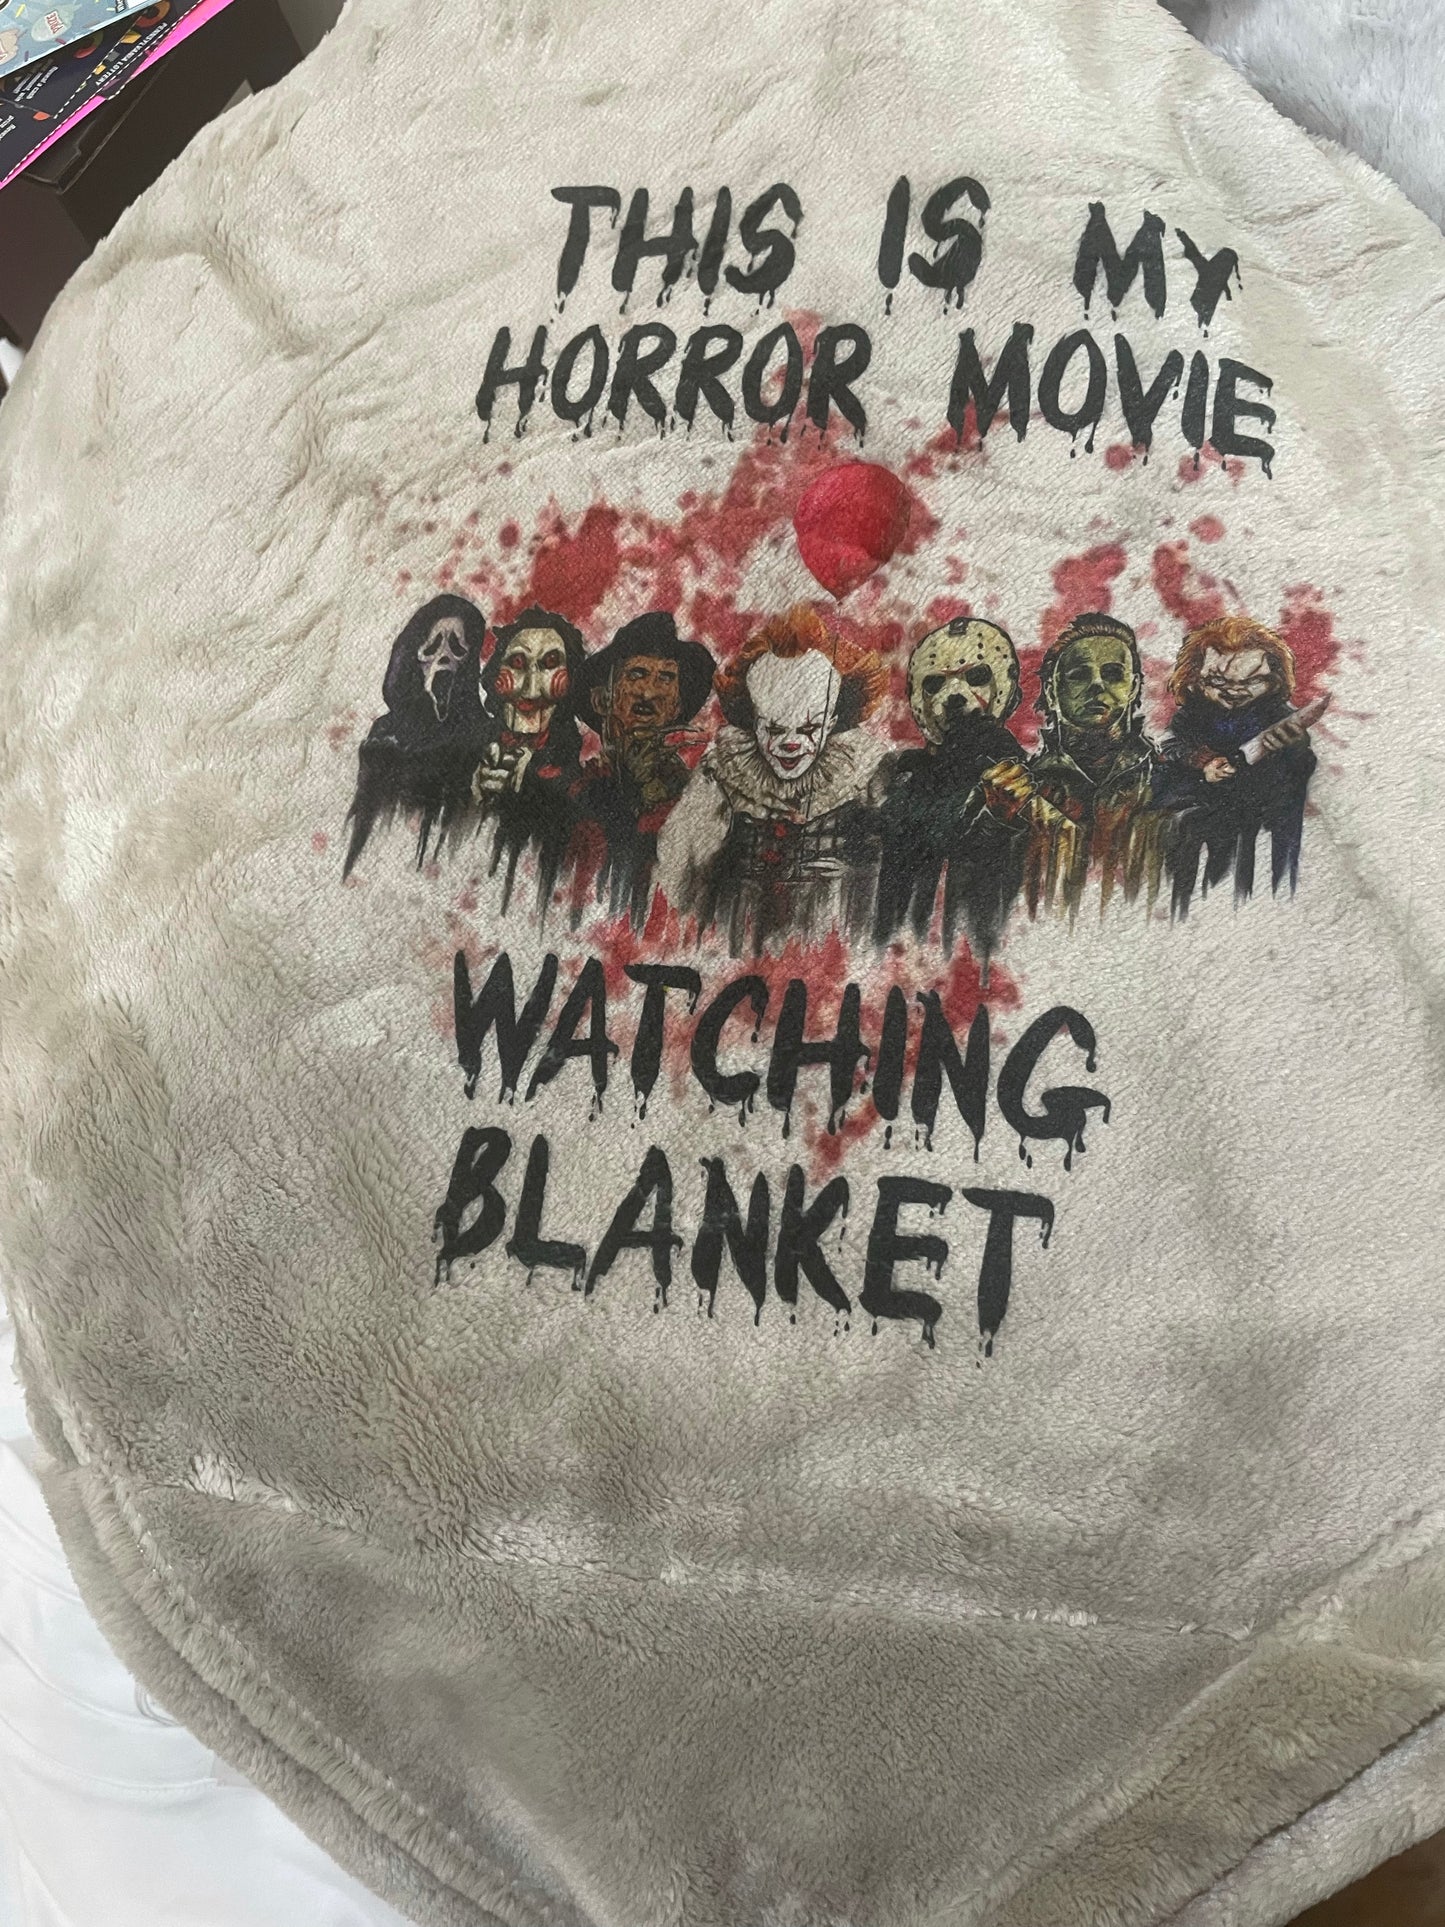 This is my Horror Movie Watching Blanket